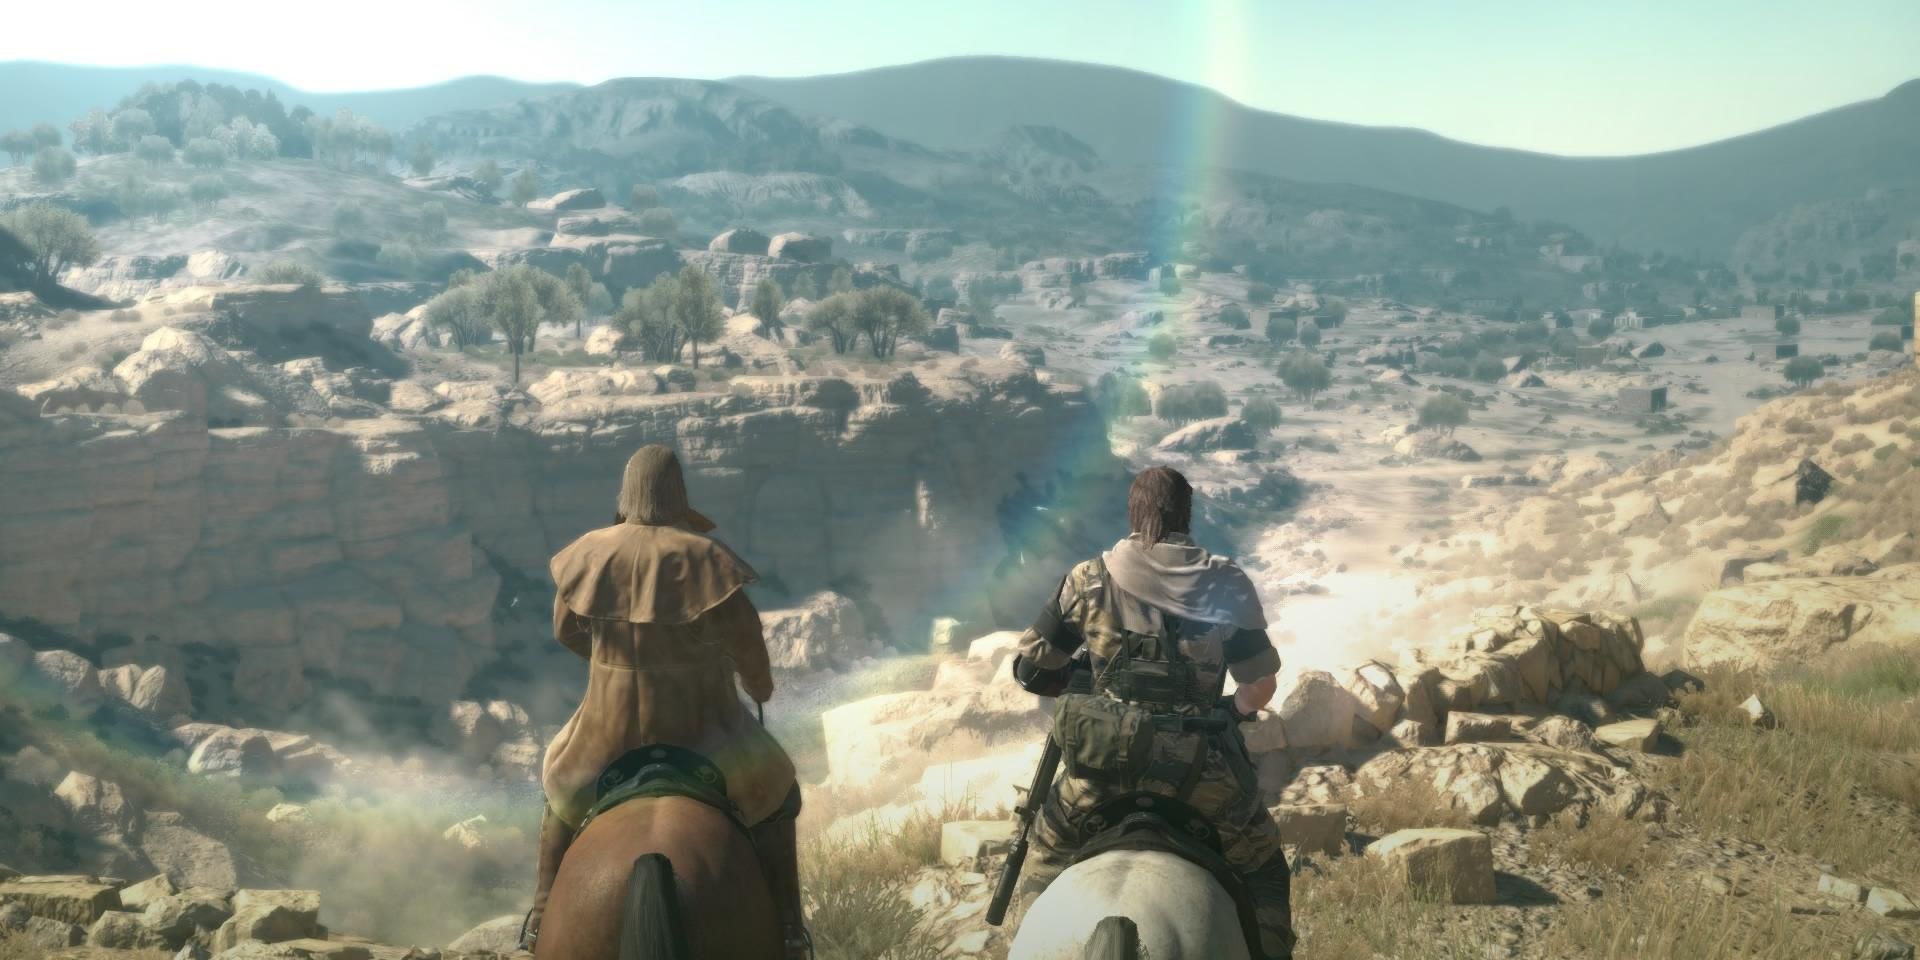 Venom Snake and Revolver Ocelot gaze out over Afghanistan in Metal Gear Solid 5.